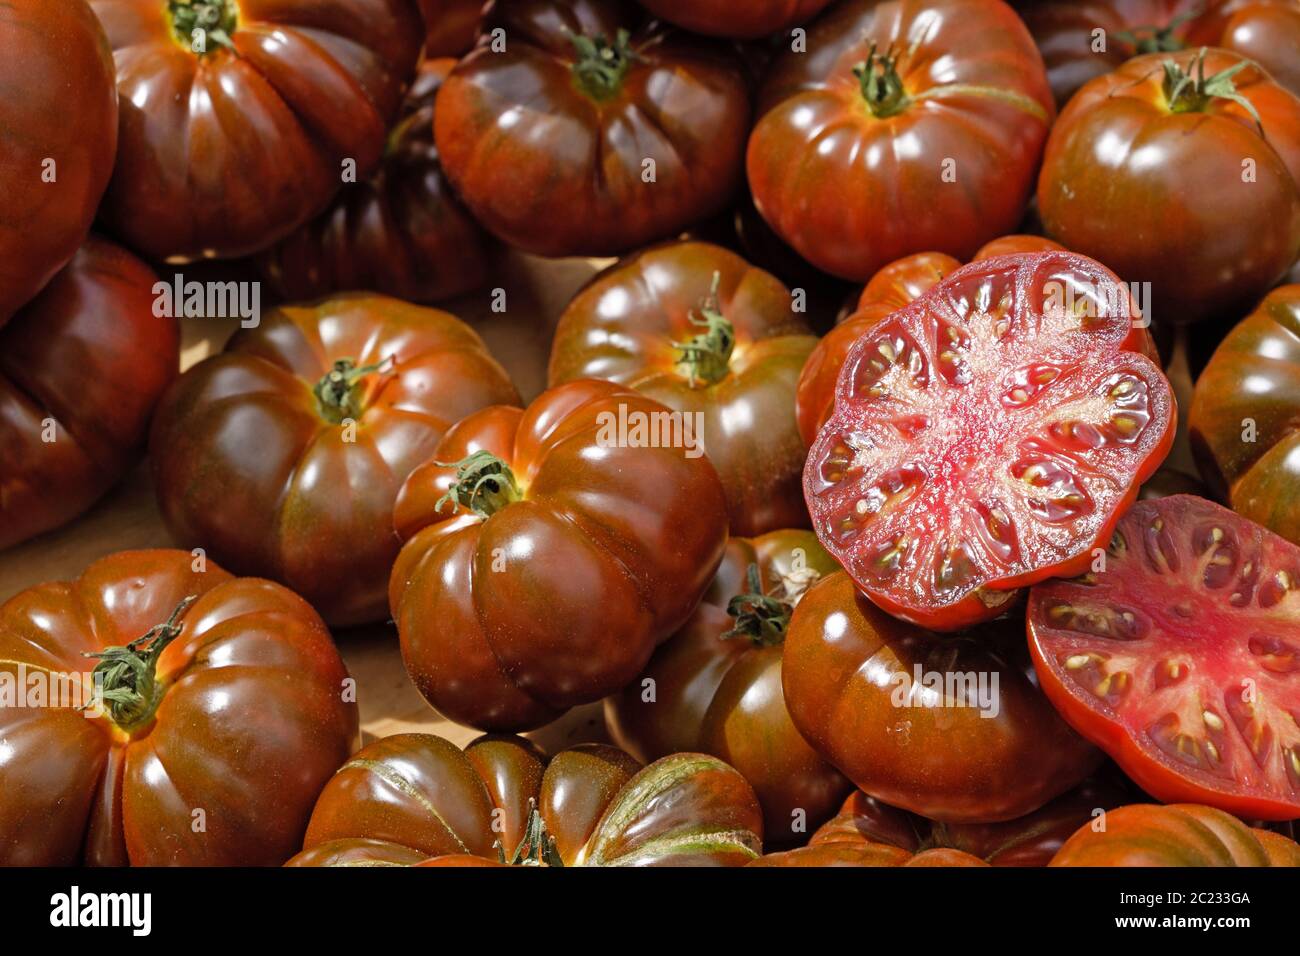 Ox heart tomatoes Stock Photo